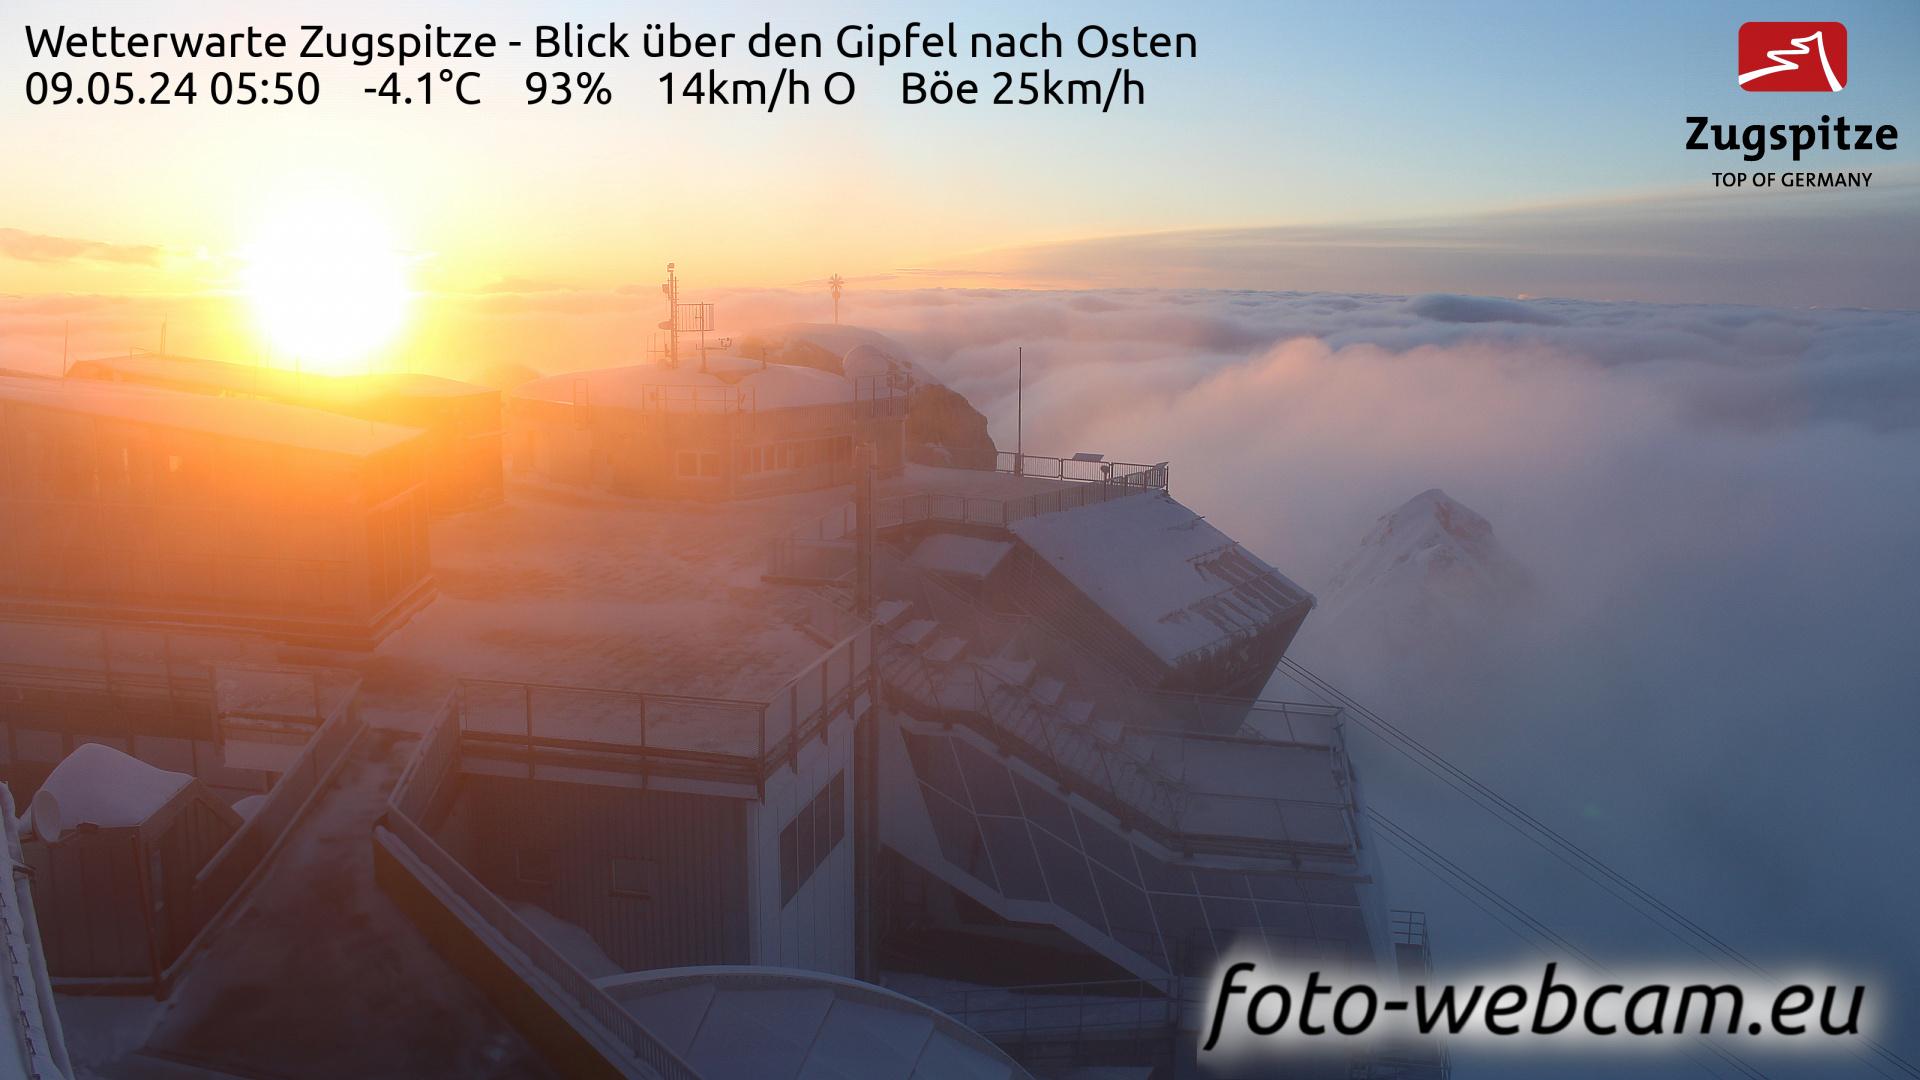 Zugspitze Sun. 05:55